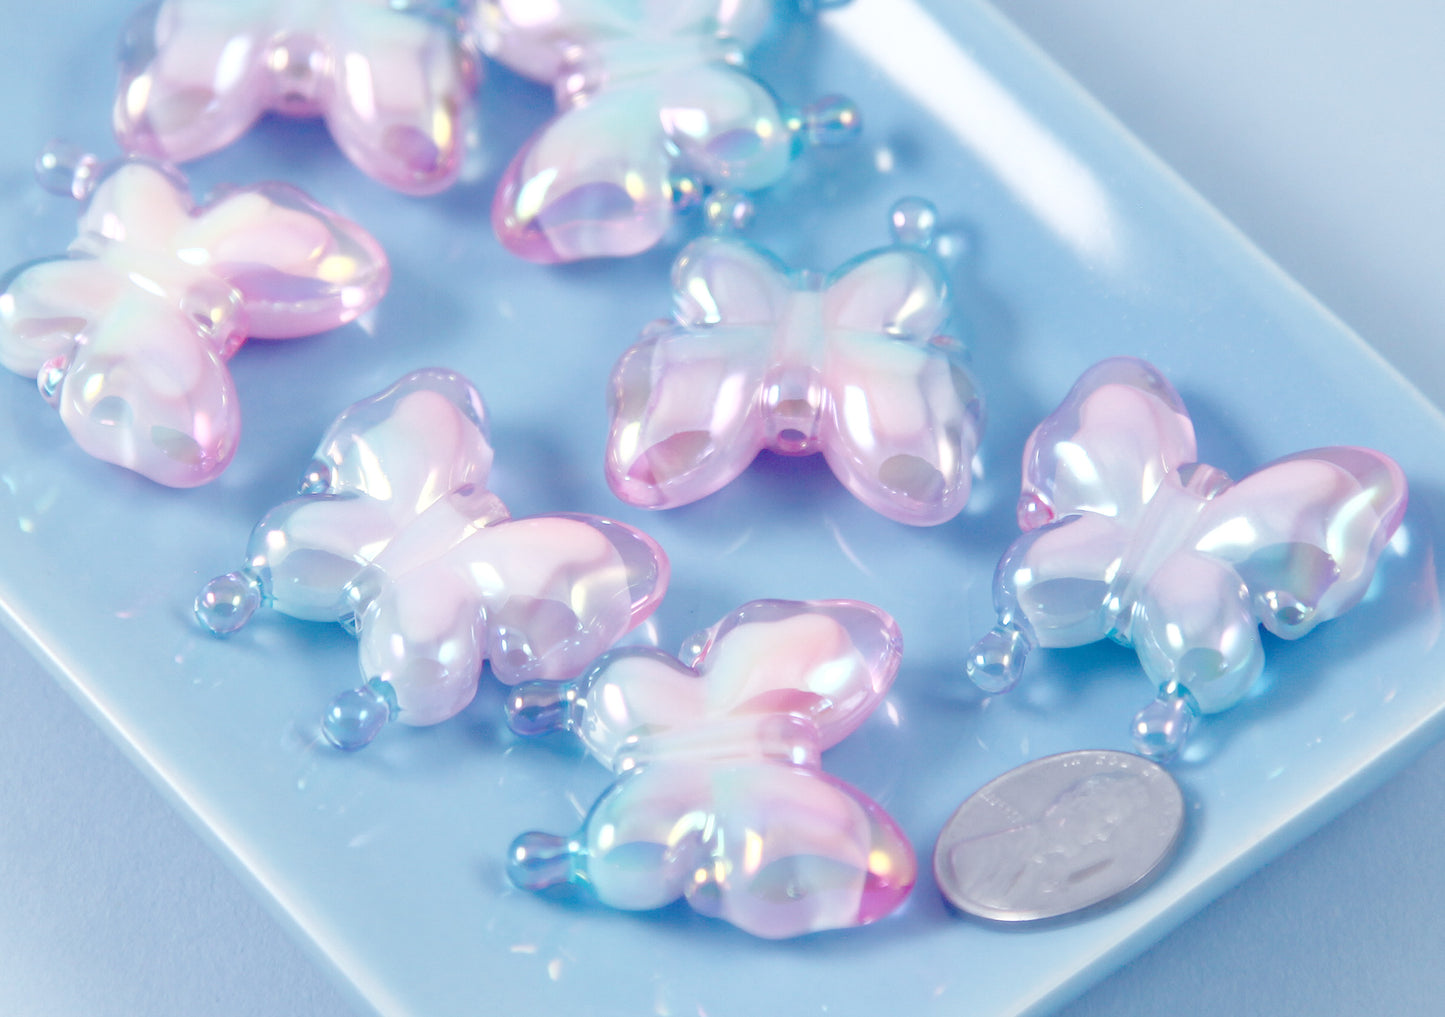 SSC Designs | Iridescent AB Flatback Pearls 6mm Blue & Pink